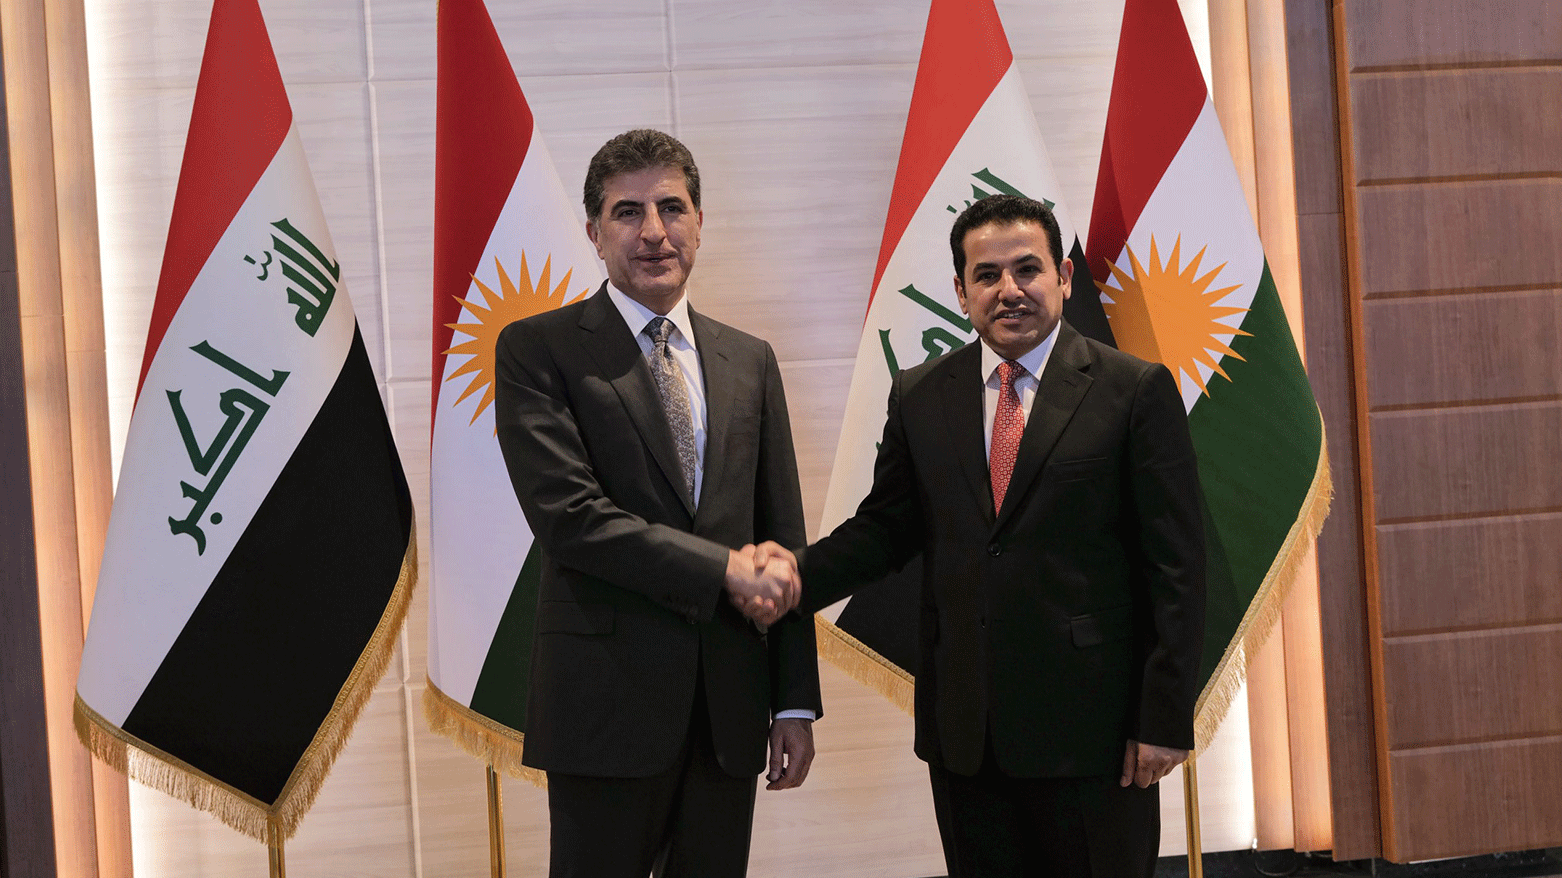 Kurdistan Region President Iraqi National Security Advisor discuss terrorism threat